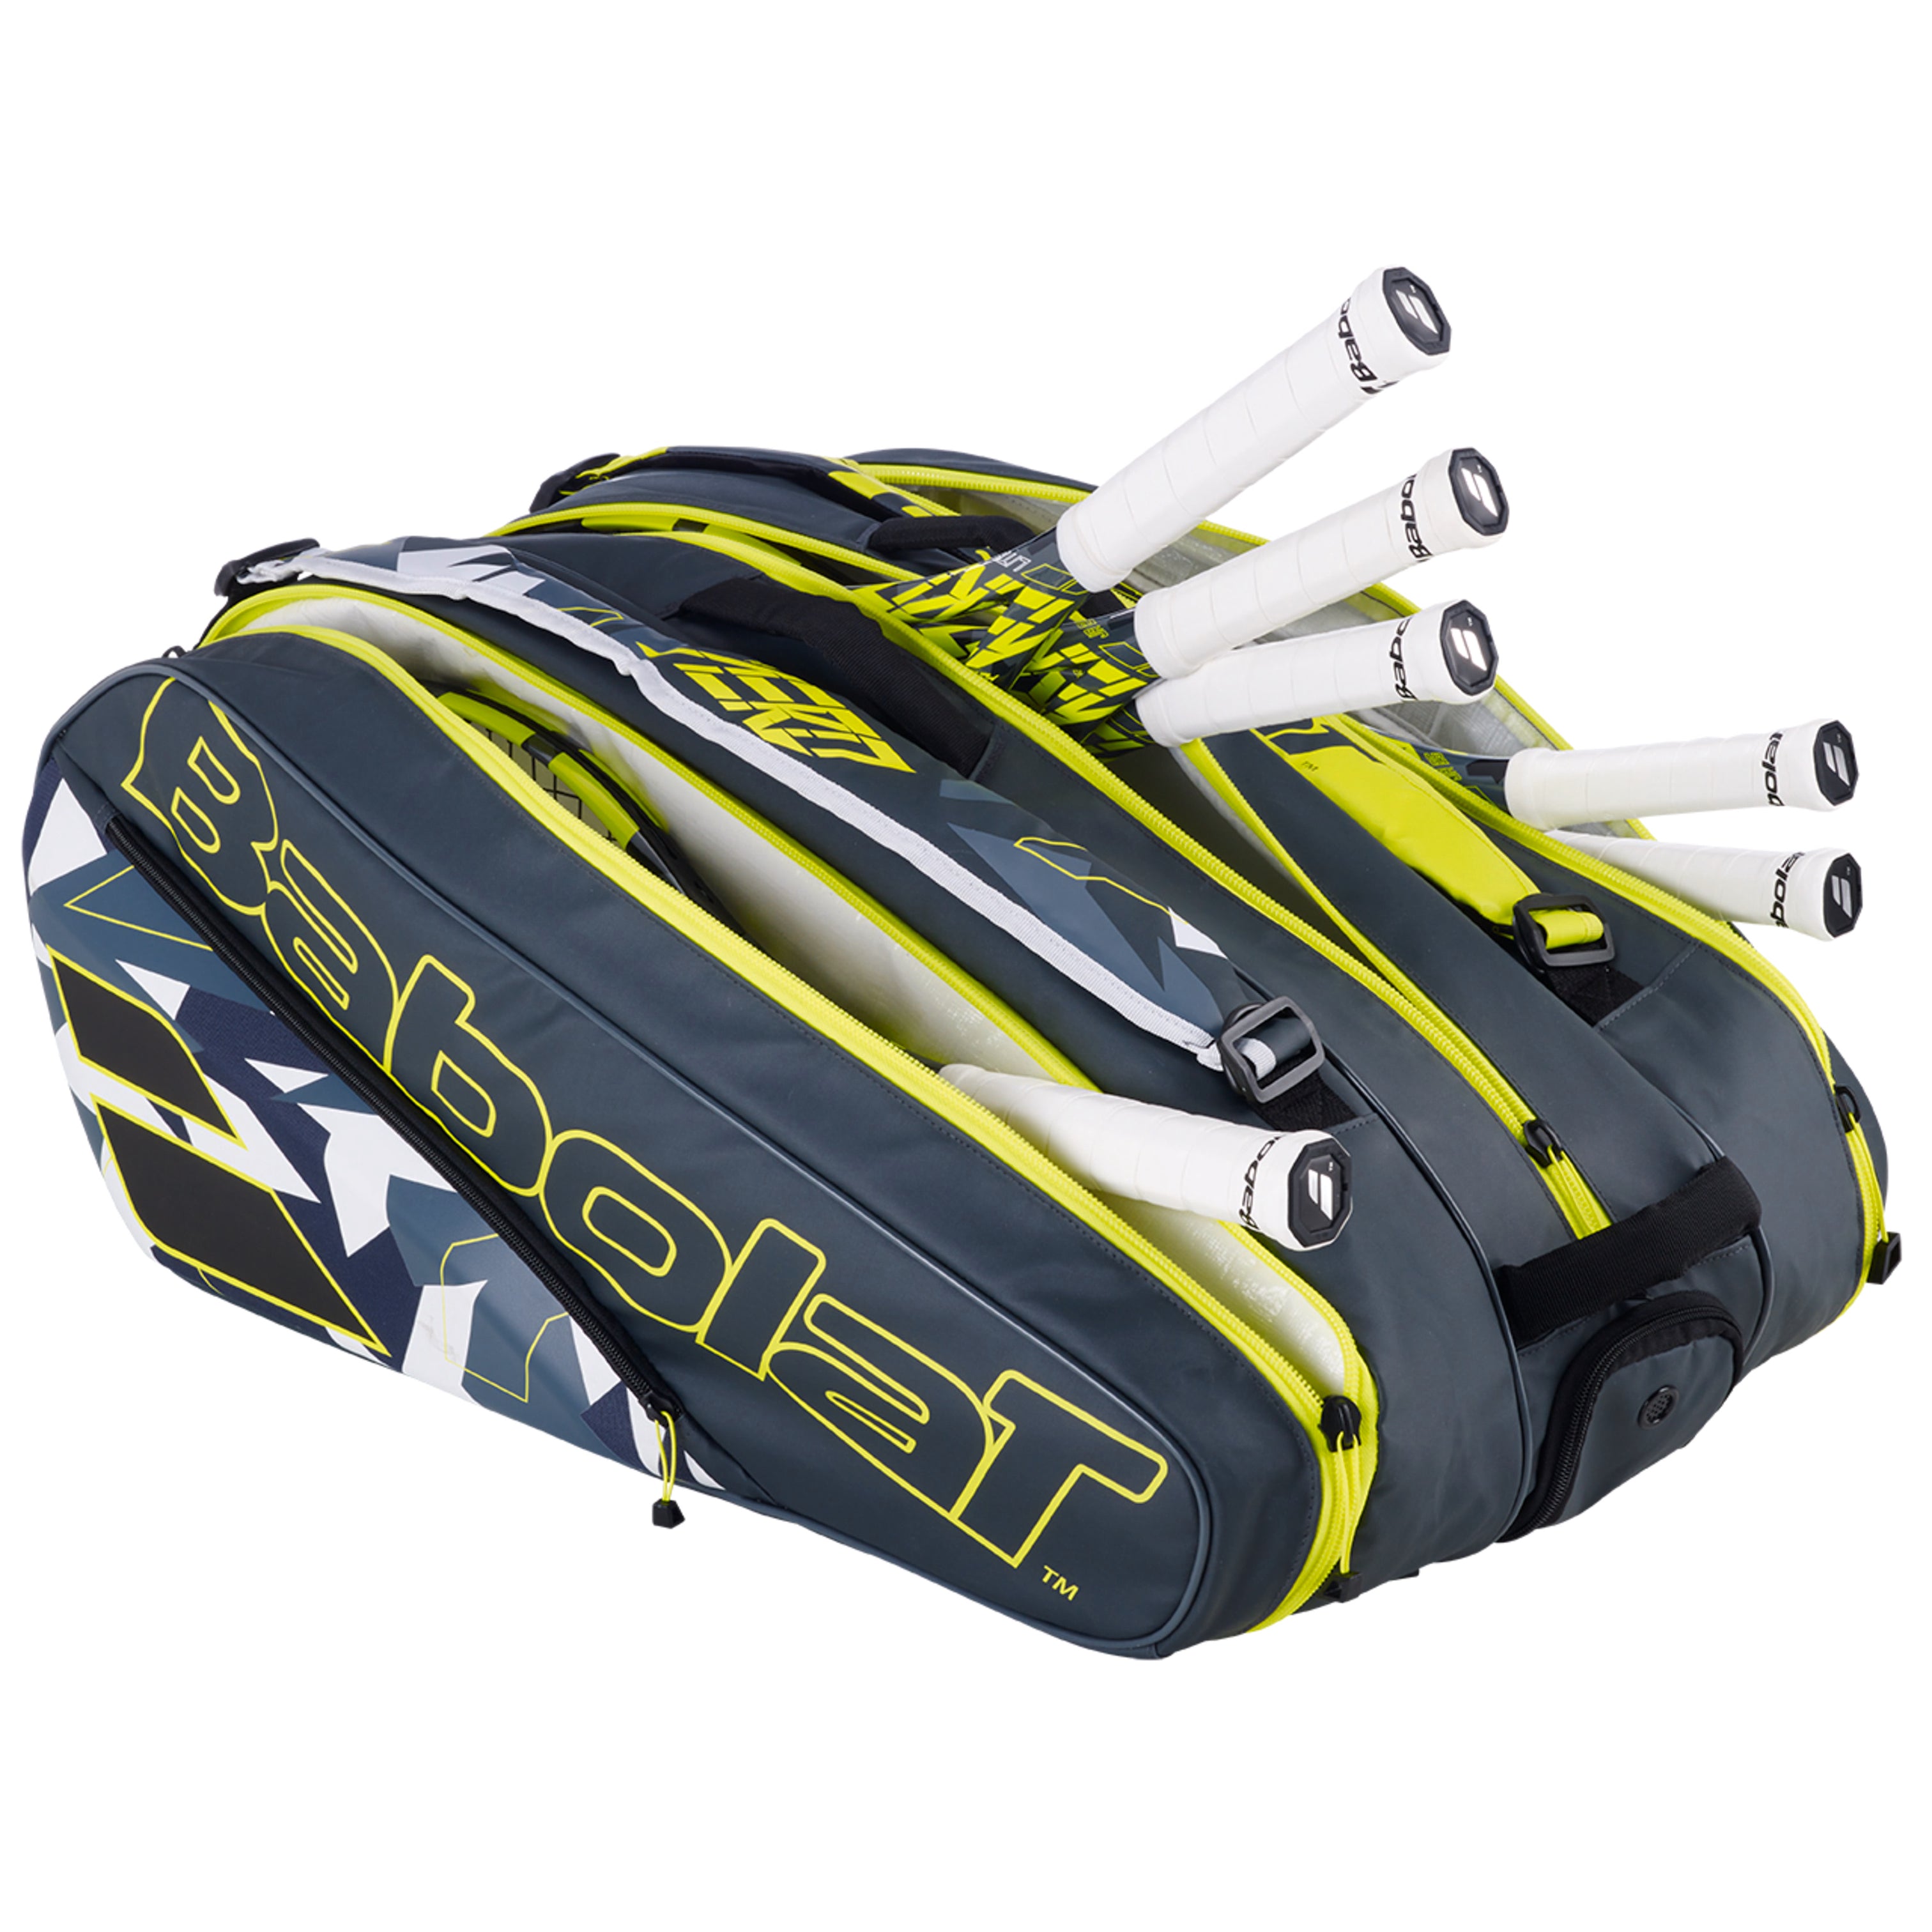 Babolat Aero Tennis Bag